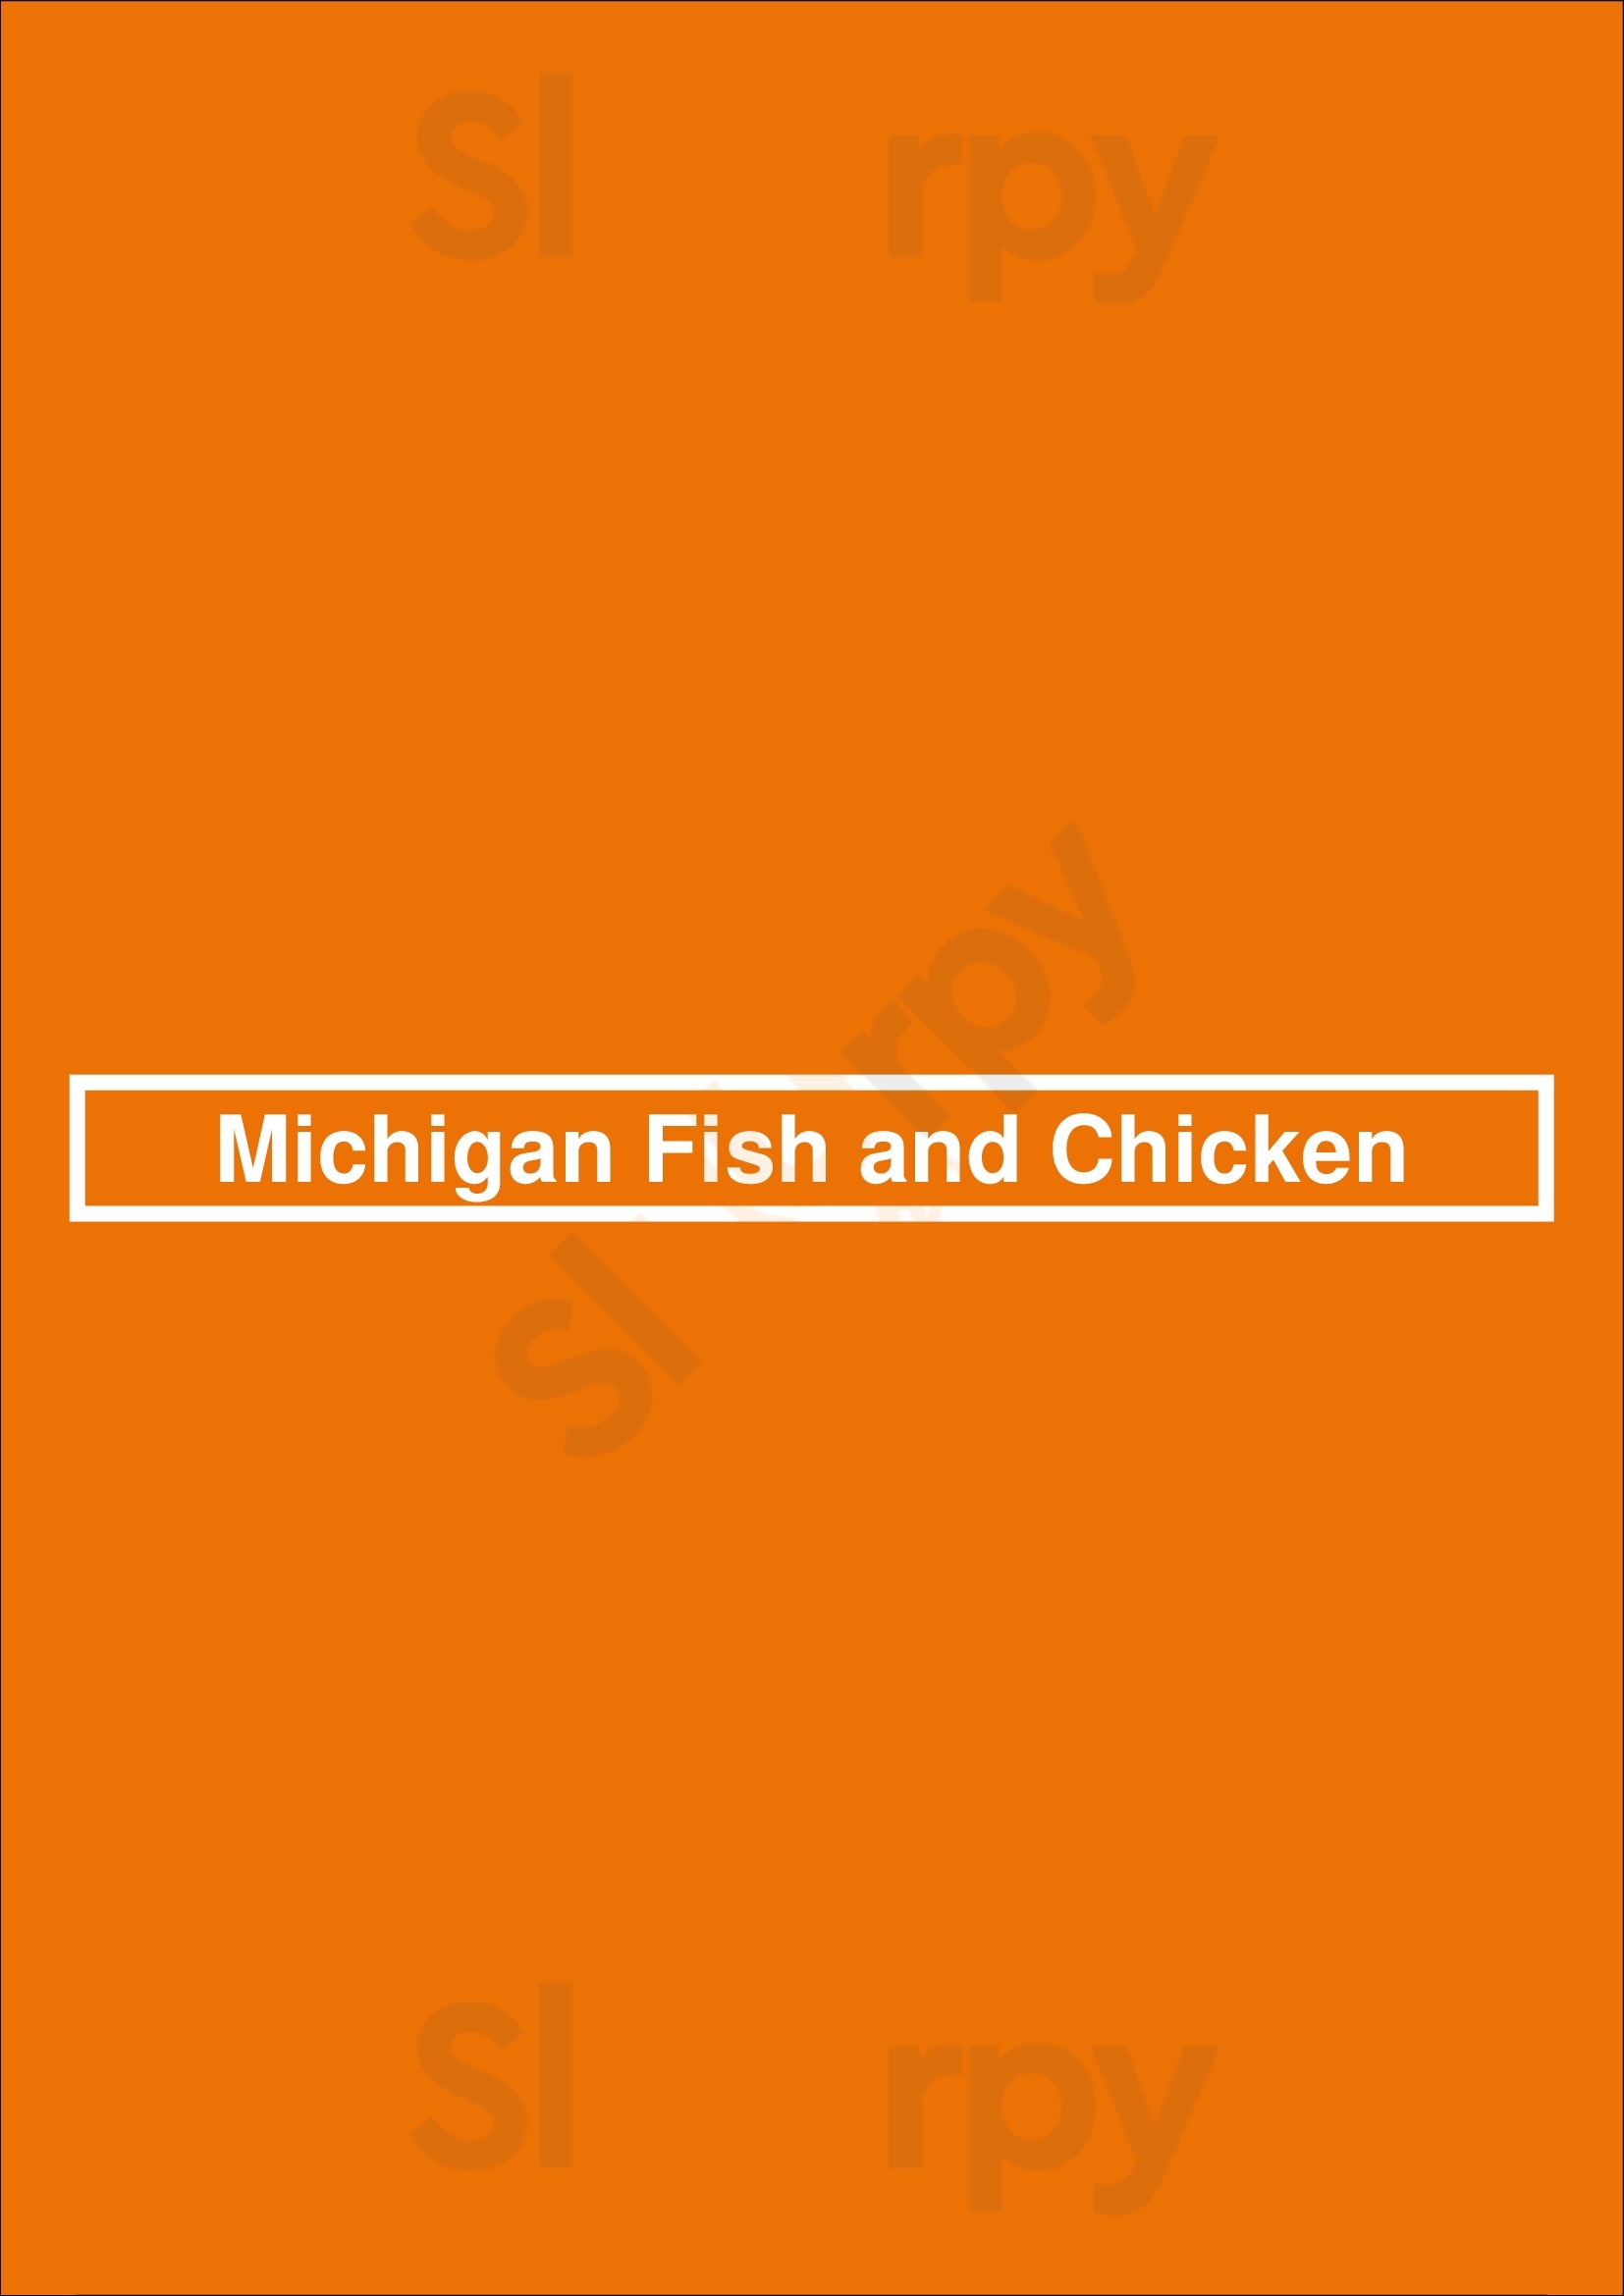 Michigan Fish And Chicken Indianapolis Menu - 1